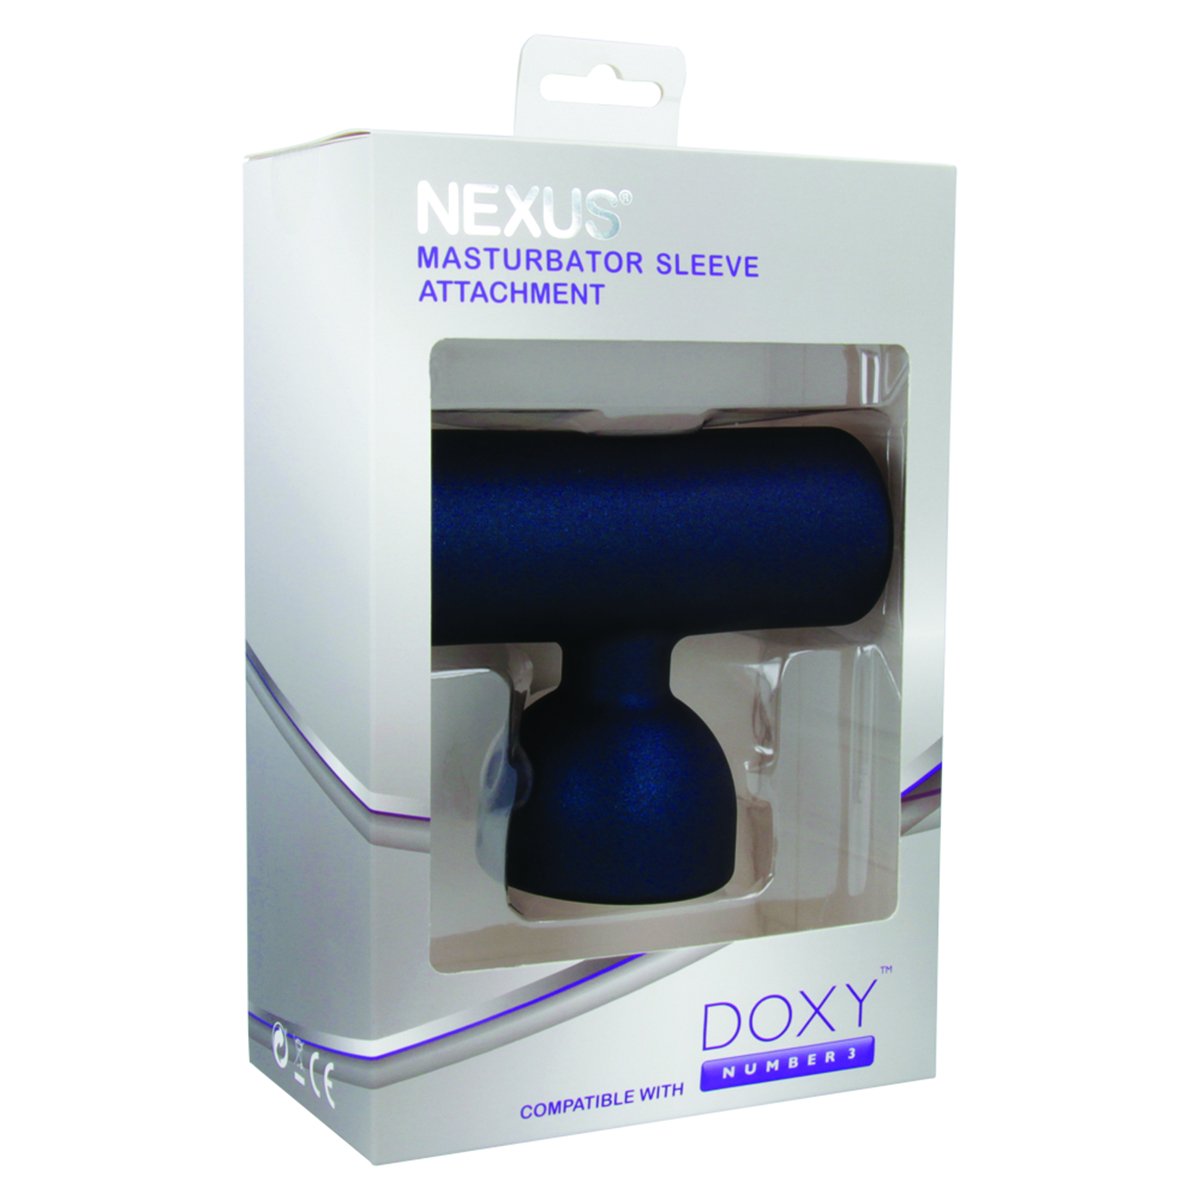 Doxy by Nexus Masturbator Attachment - Buy At Luxury Toy X - Free 3-Day Shipping